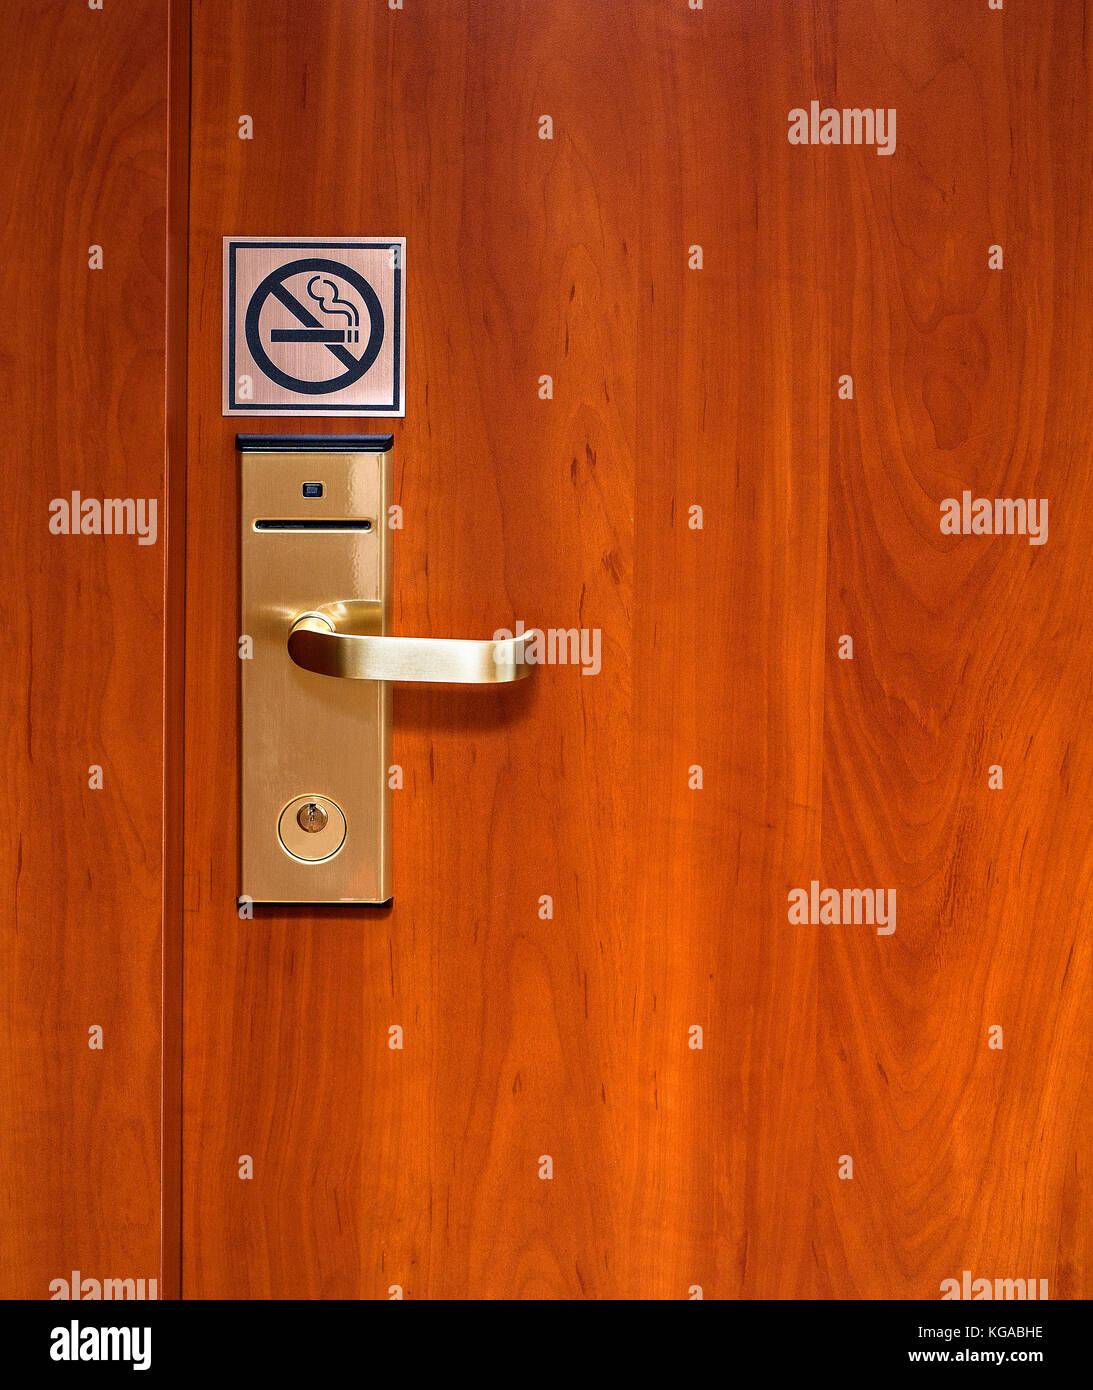 Hotel electronic lock on wooden door background Stock Photo